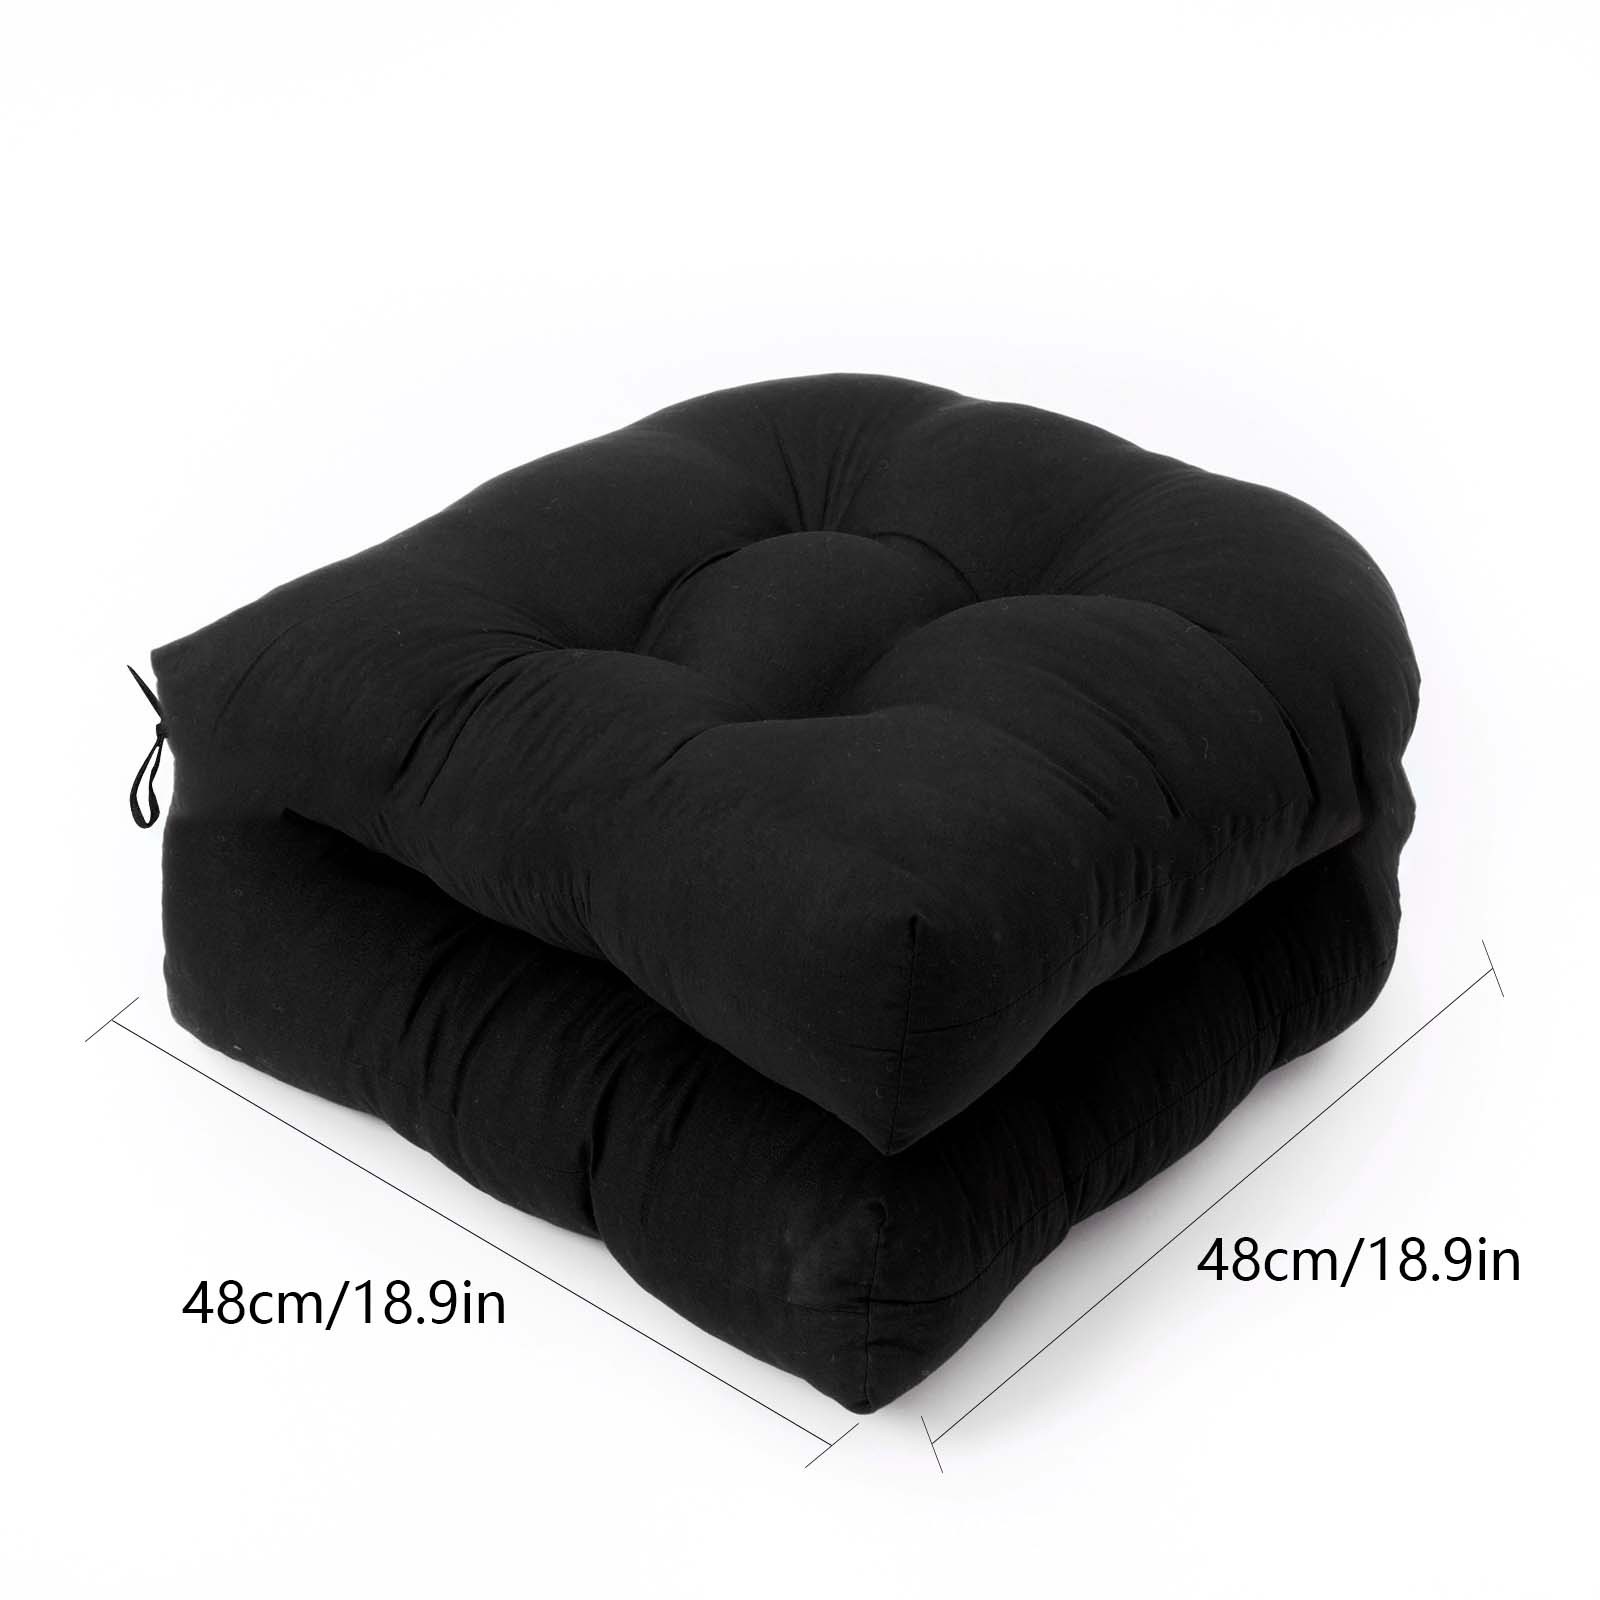 Mduoduo U-shaped Cushion Sofa Cushion Rattan Chair Black Cushion Terrace Cushion for Outdoor Indoor 2 Pcs - image 3 of 14